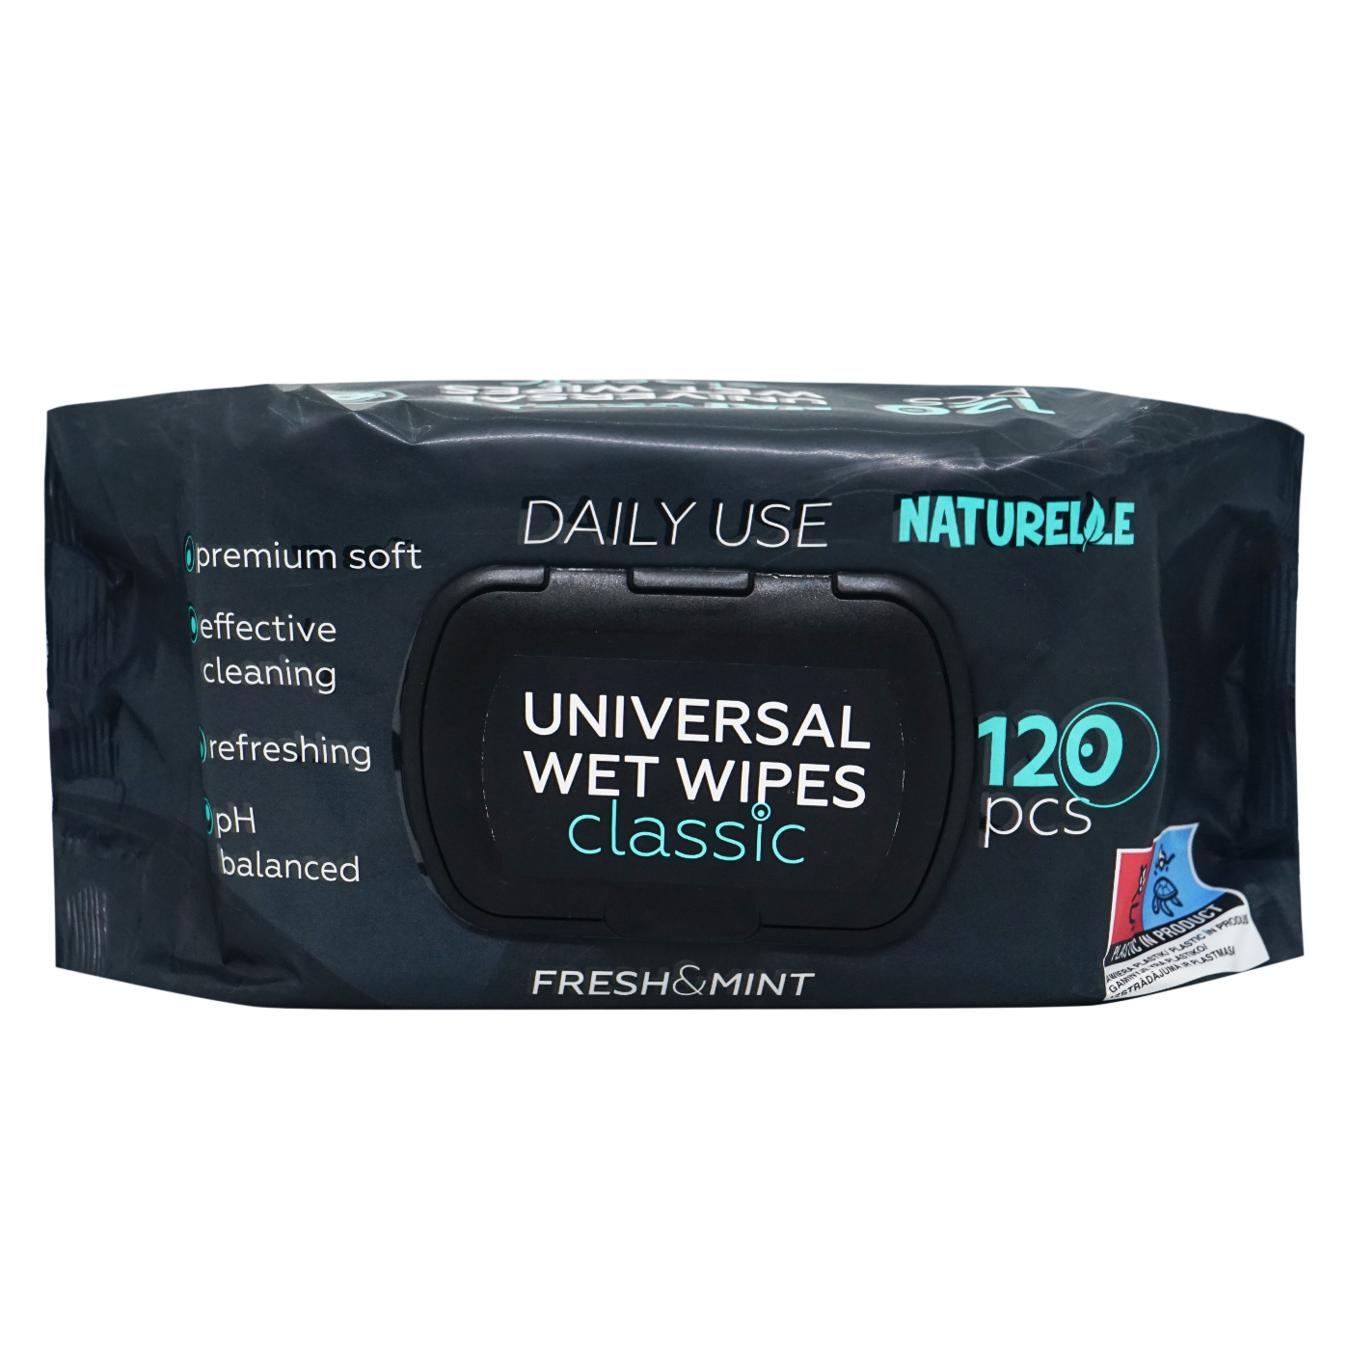 Wet wipes Naturelle classic universal 120 pcs